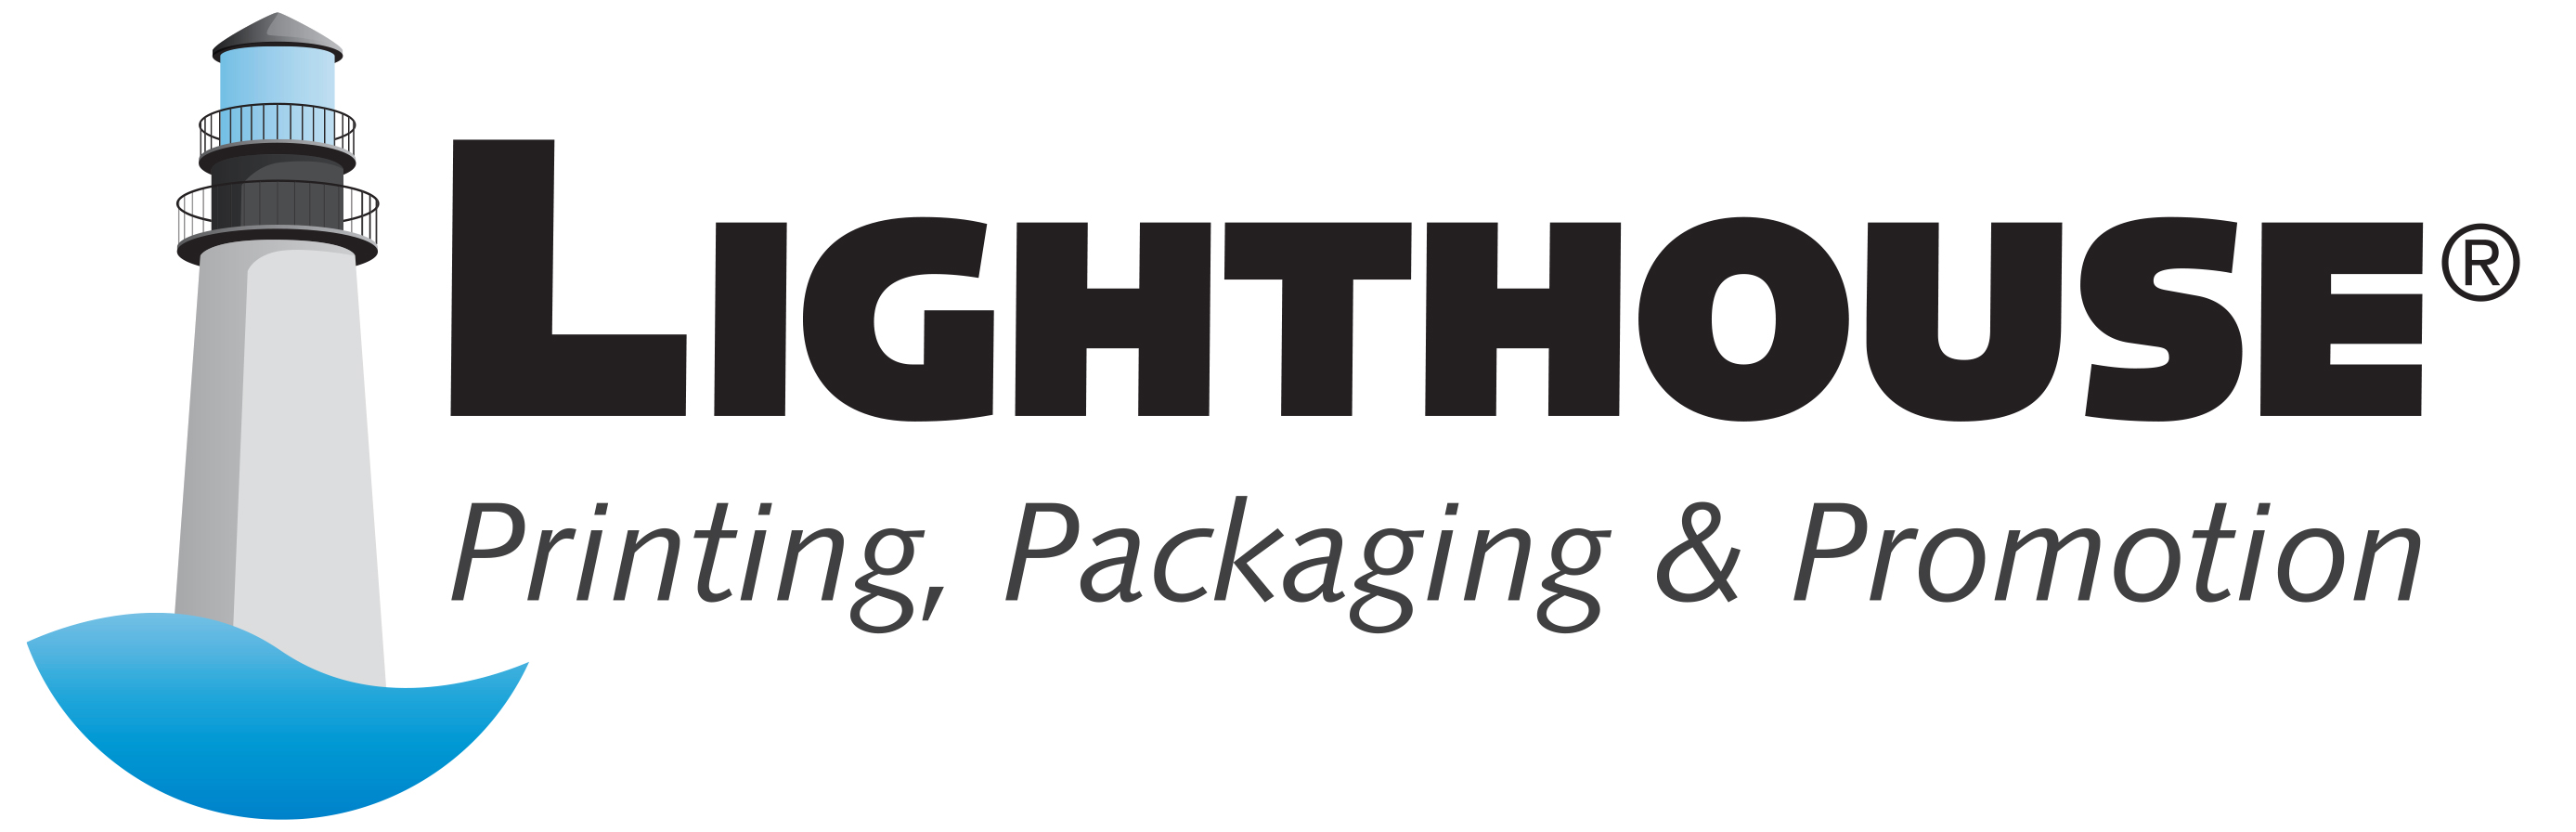 Lighthouse Printing's Logo